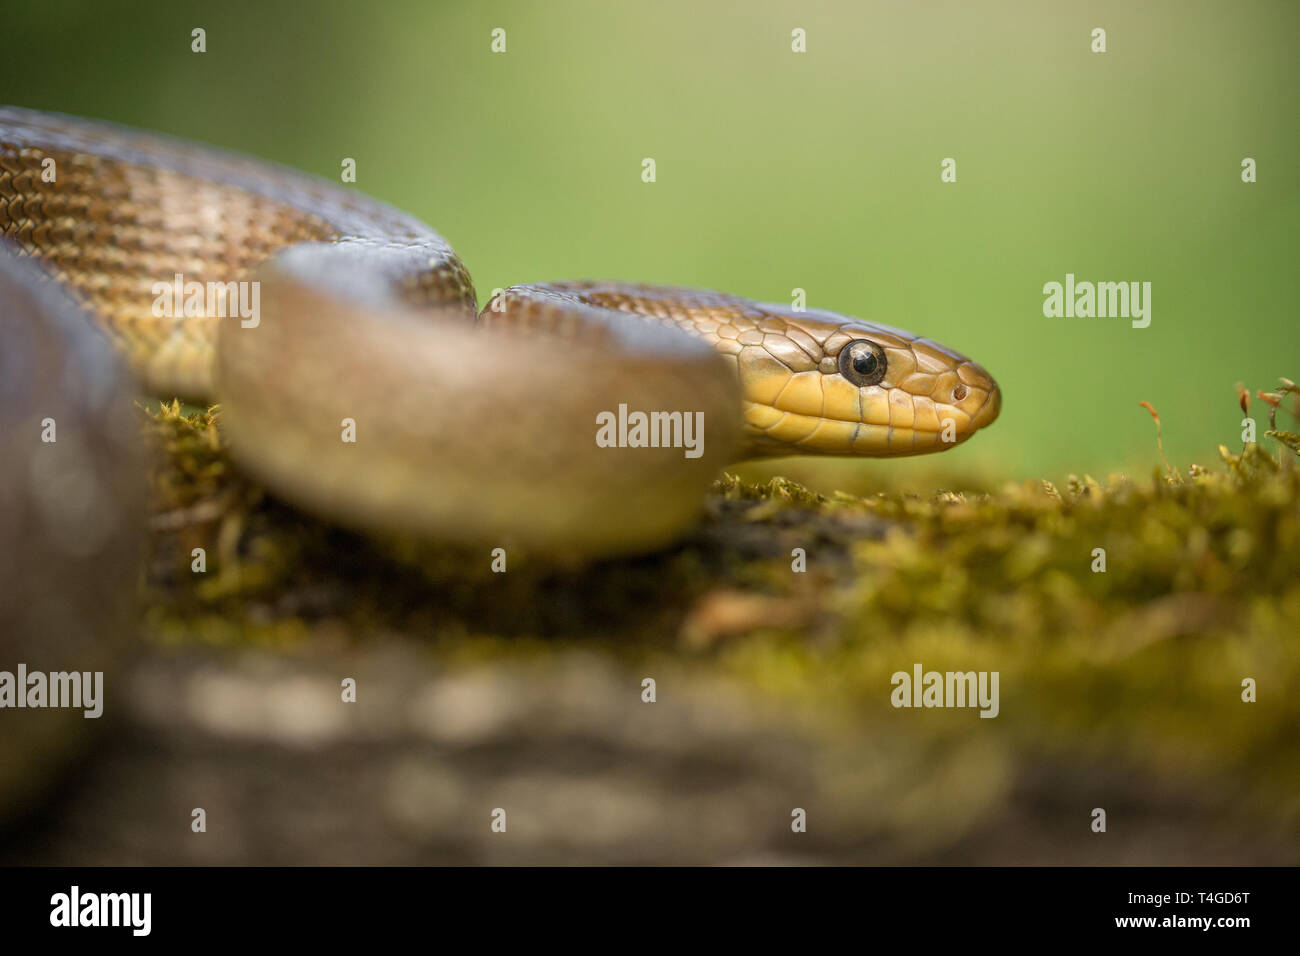 Wildlife photo of Aesculapian snake Zamenis longissimus Stock Photo